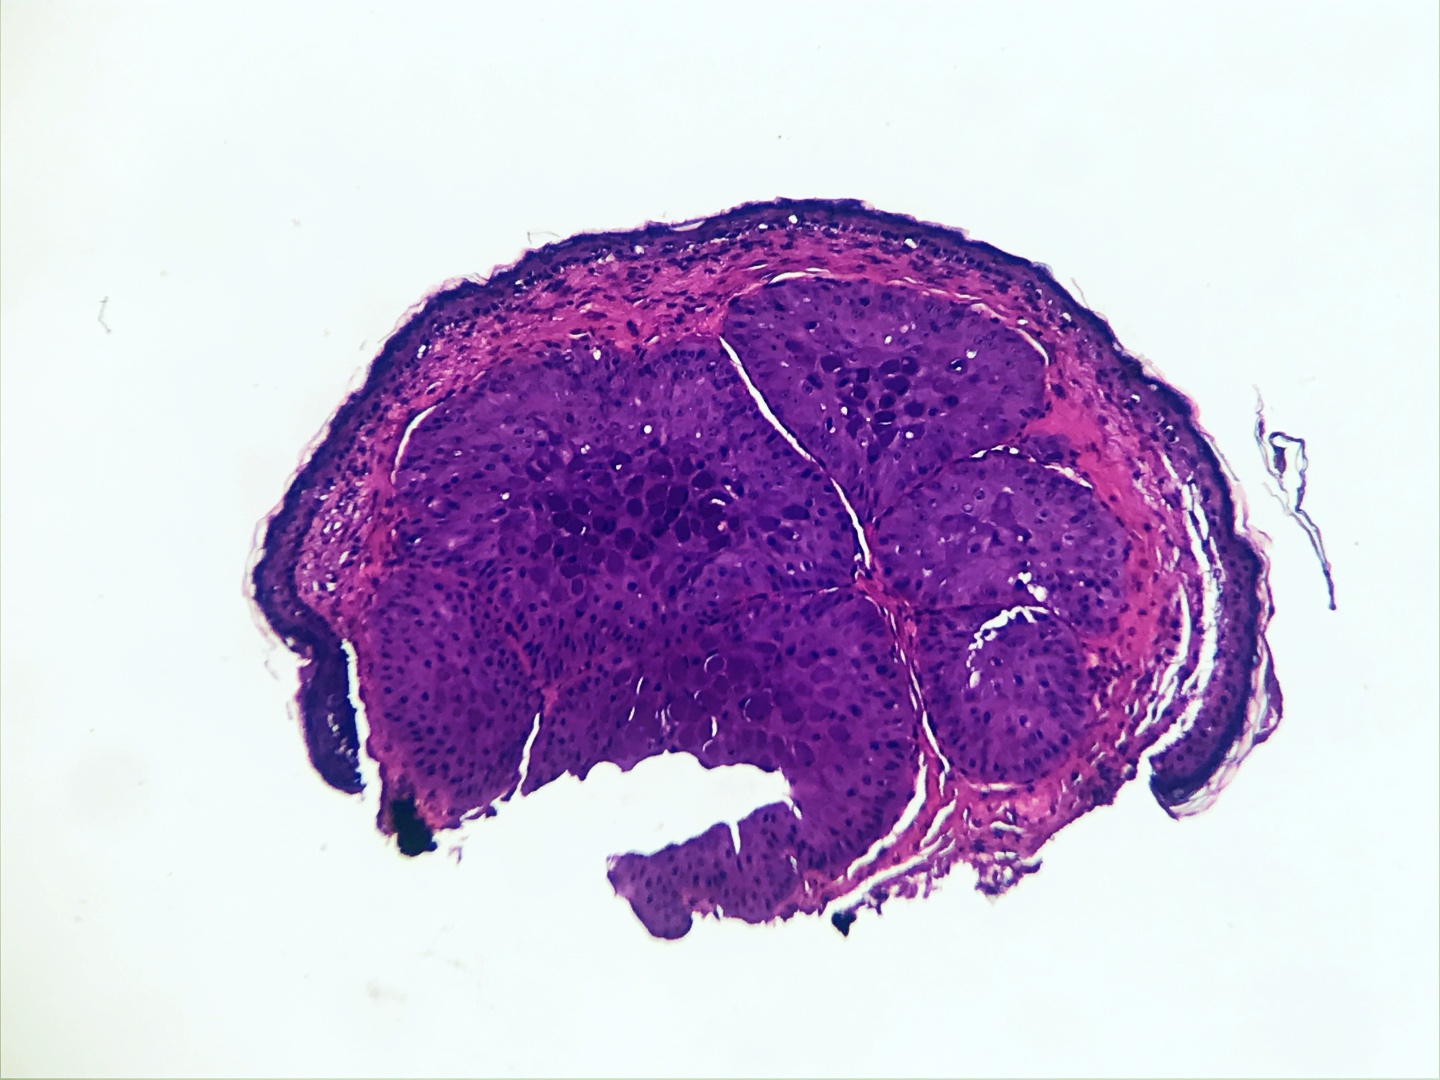 Pathology Outlines Molluscum Contagiosum